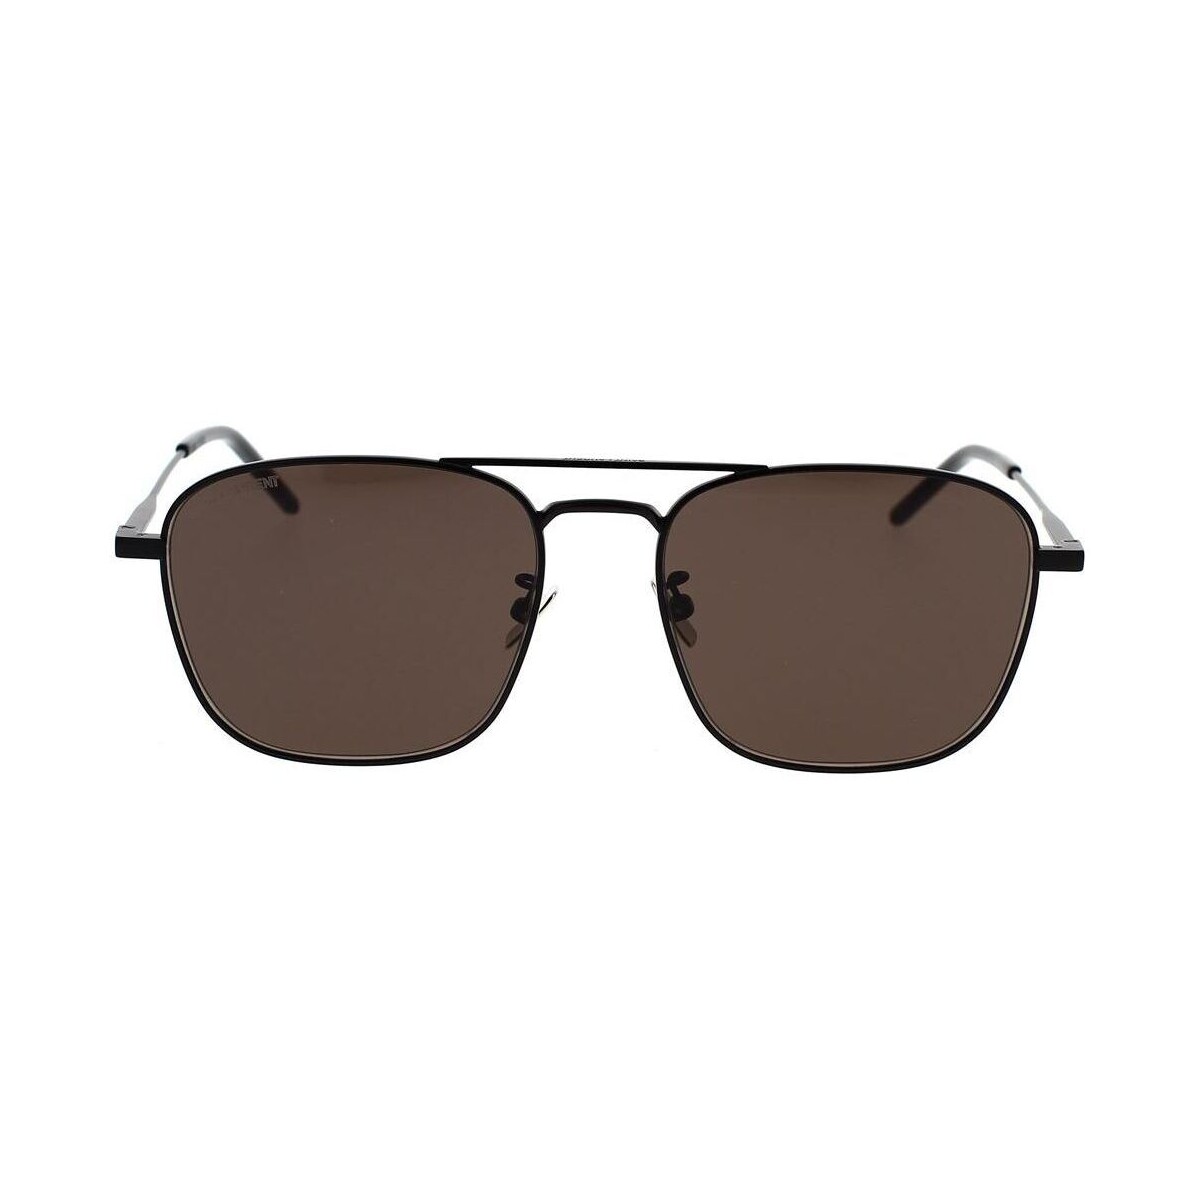 Uhren & Schmuck Sonnenbrillen Yves Saint Laurent Saint Laurent Klassische SL 309 002 Sonnenbrille Schwarz